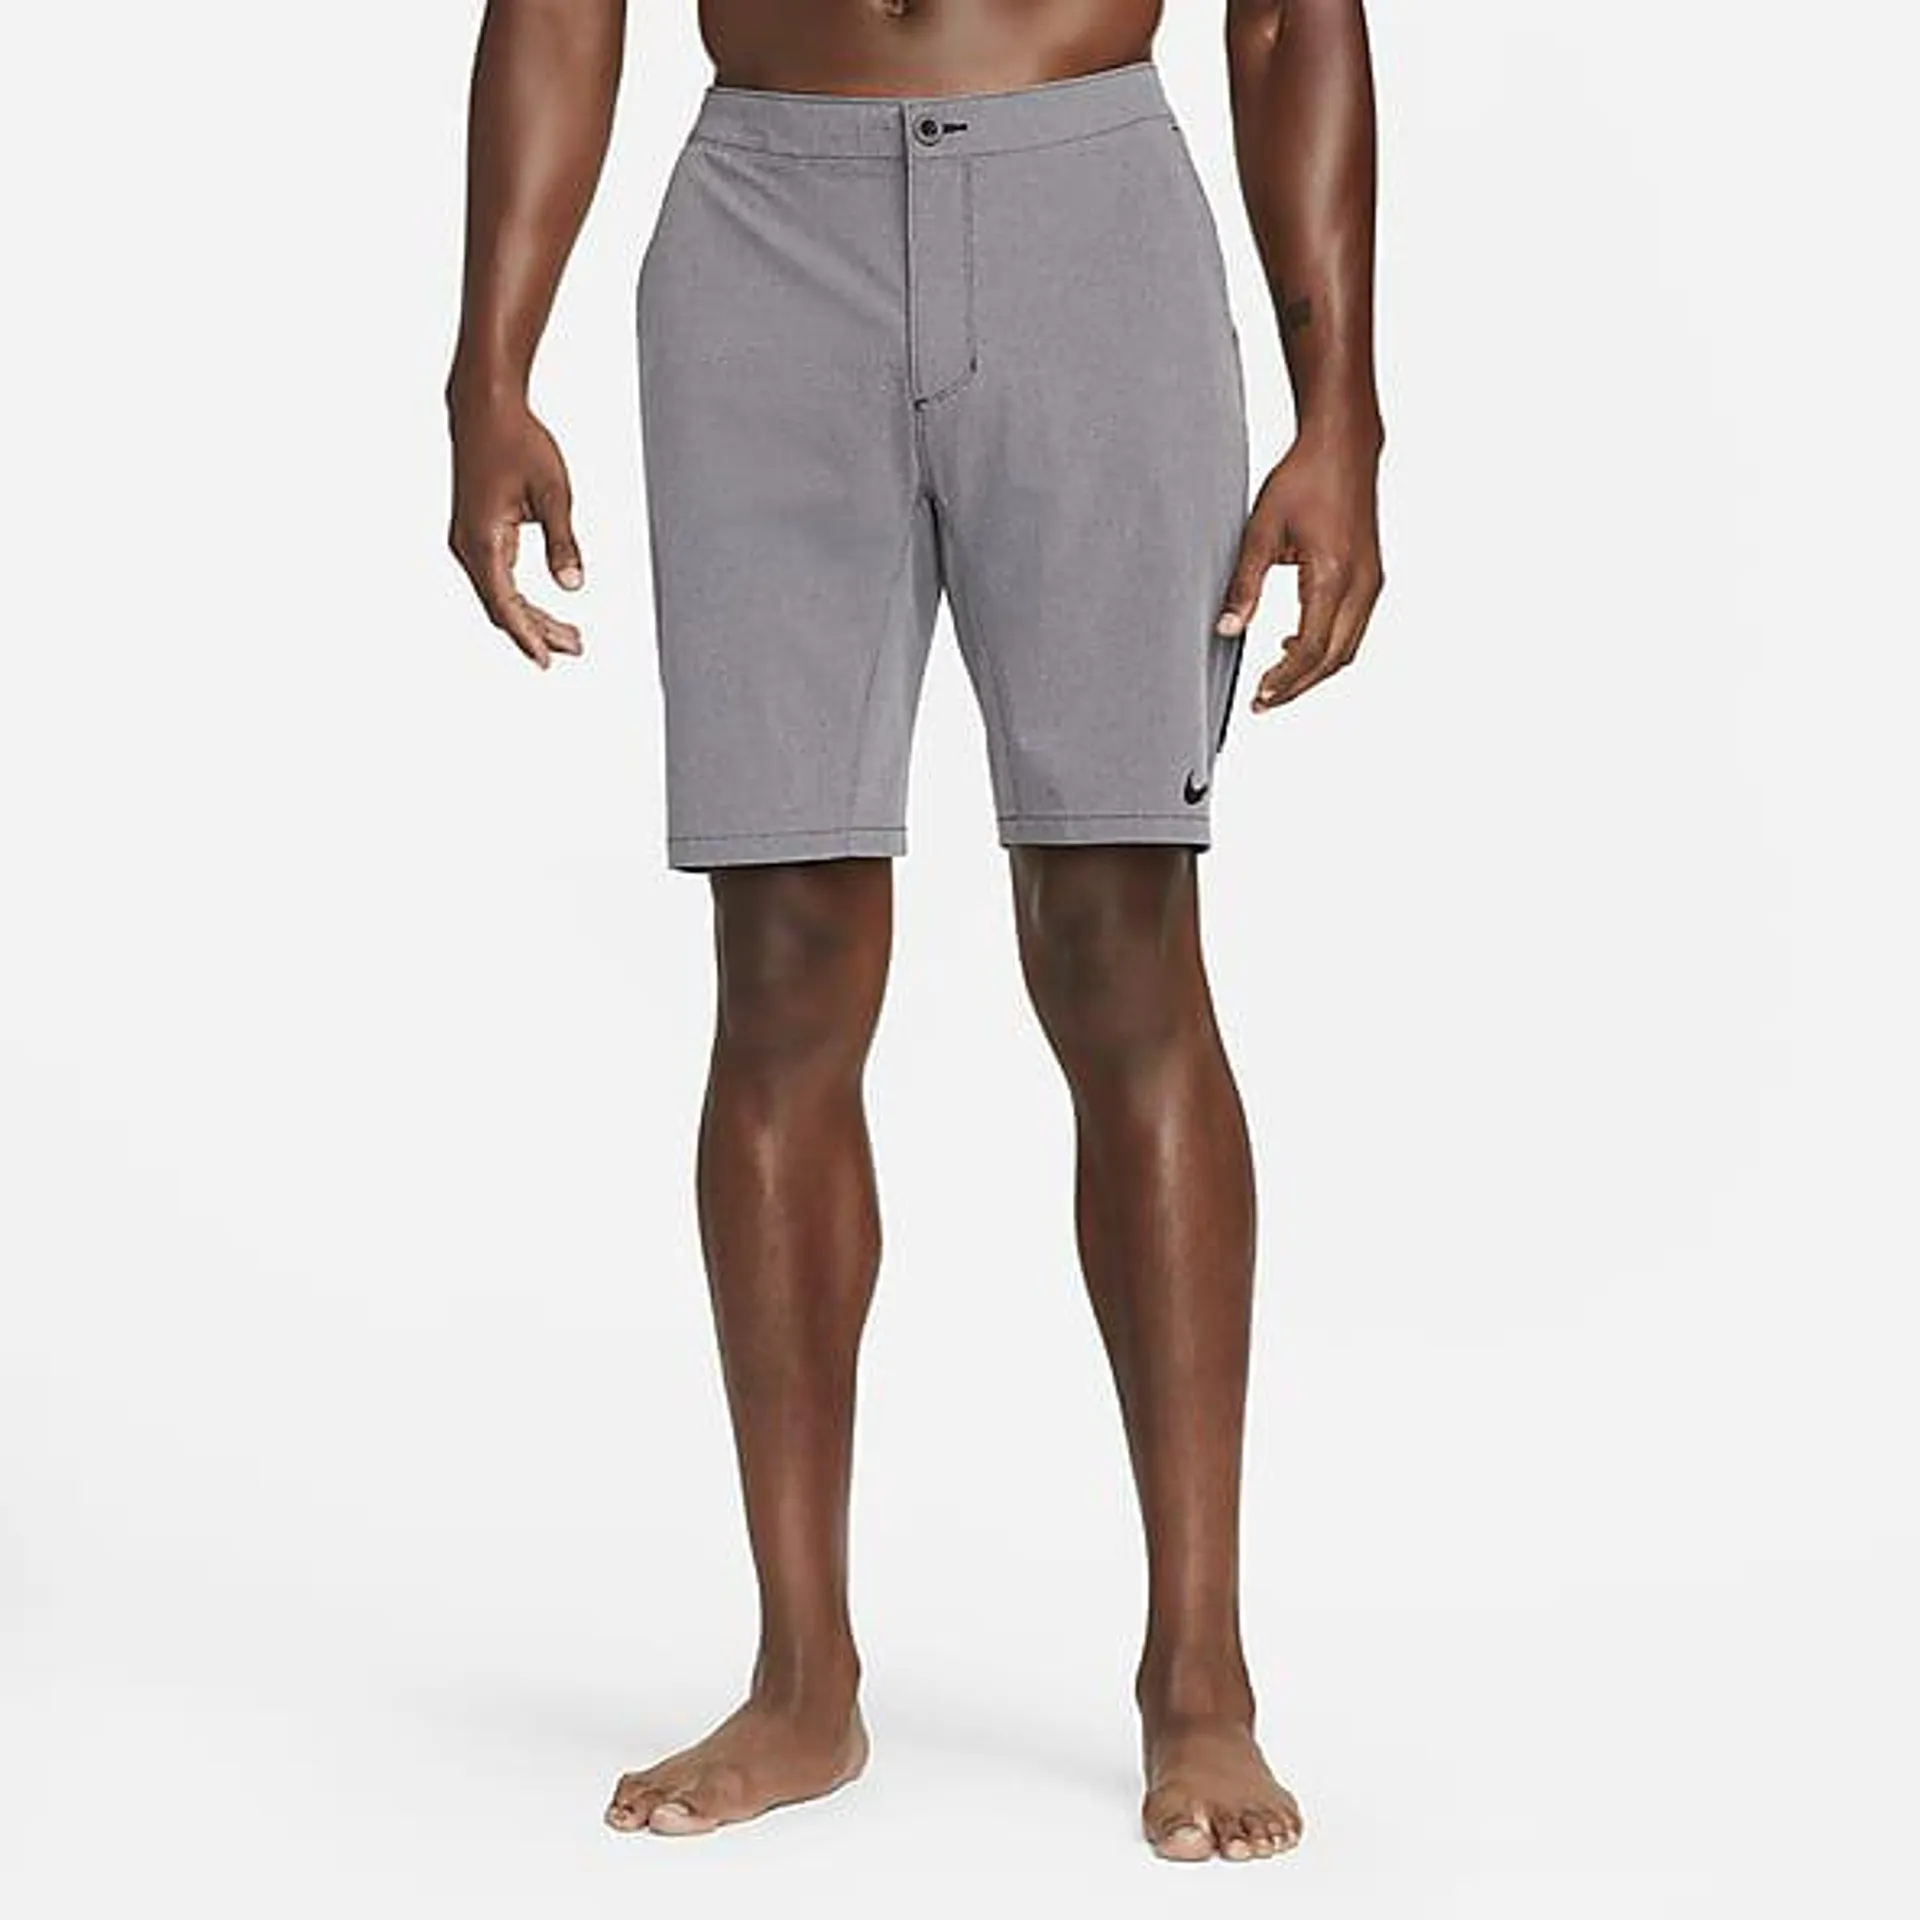 Men's 23cm (approx.) Hybrid Swimming Shorts